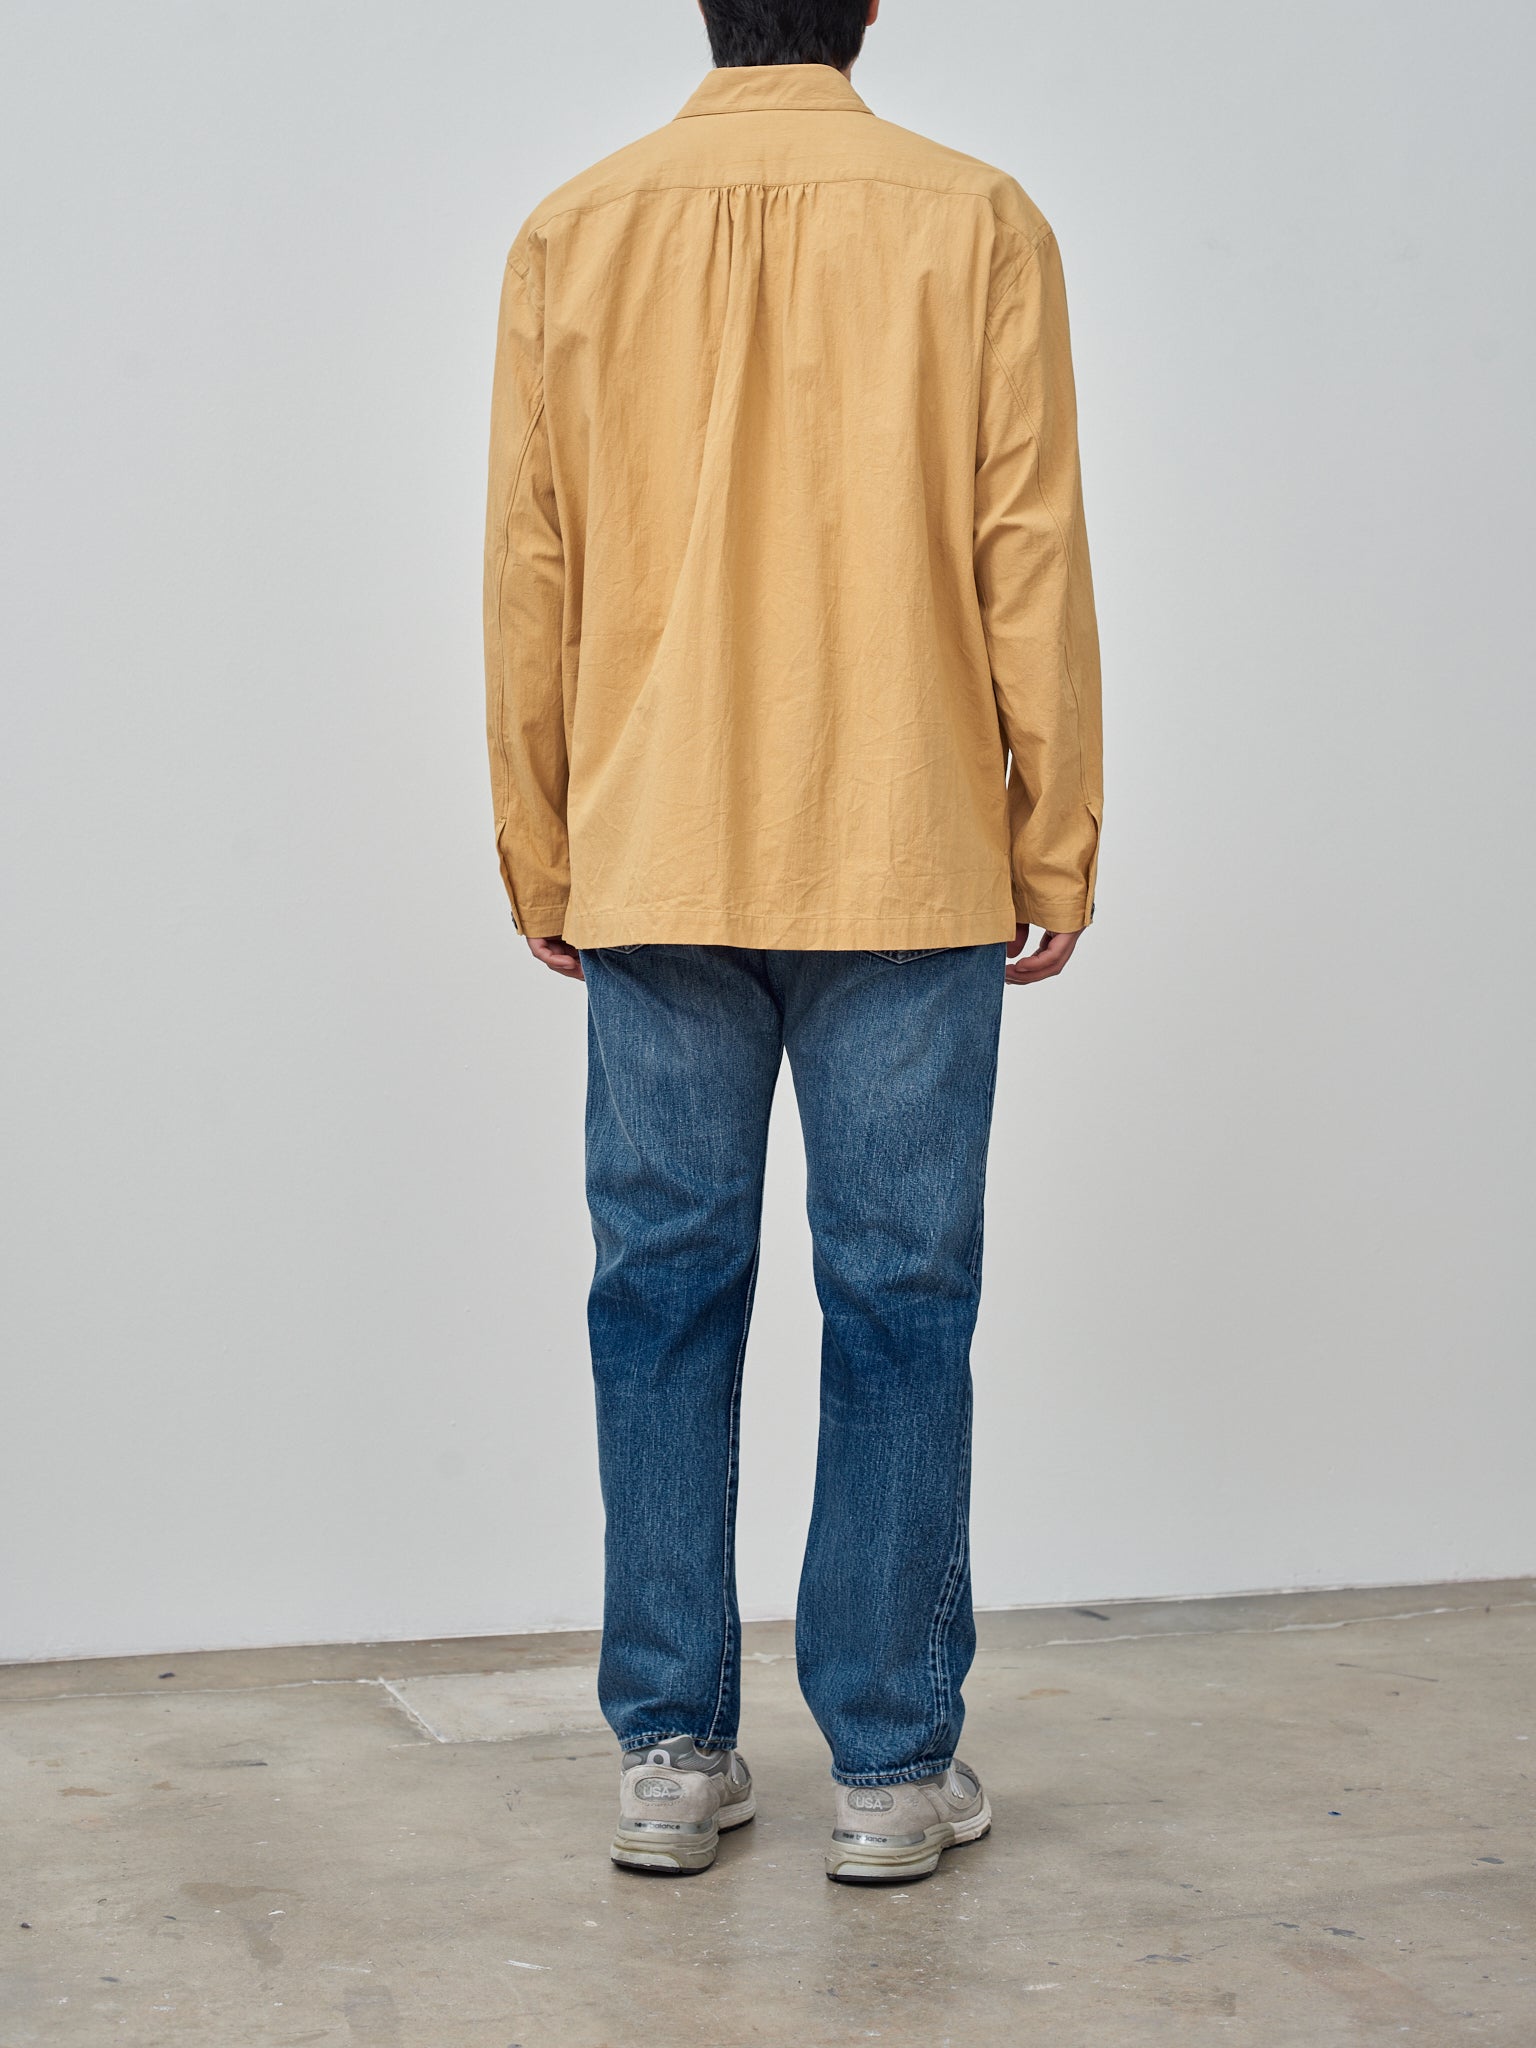 Namu Shop - Fujito Shirt Jacket - Beige